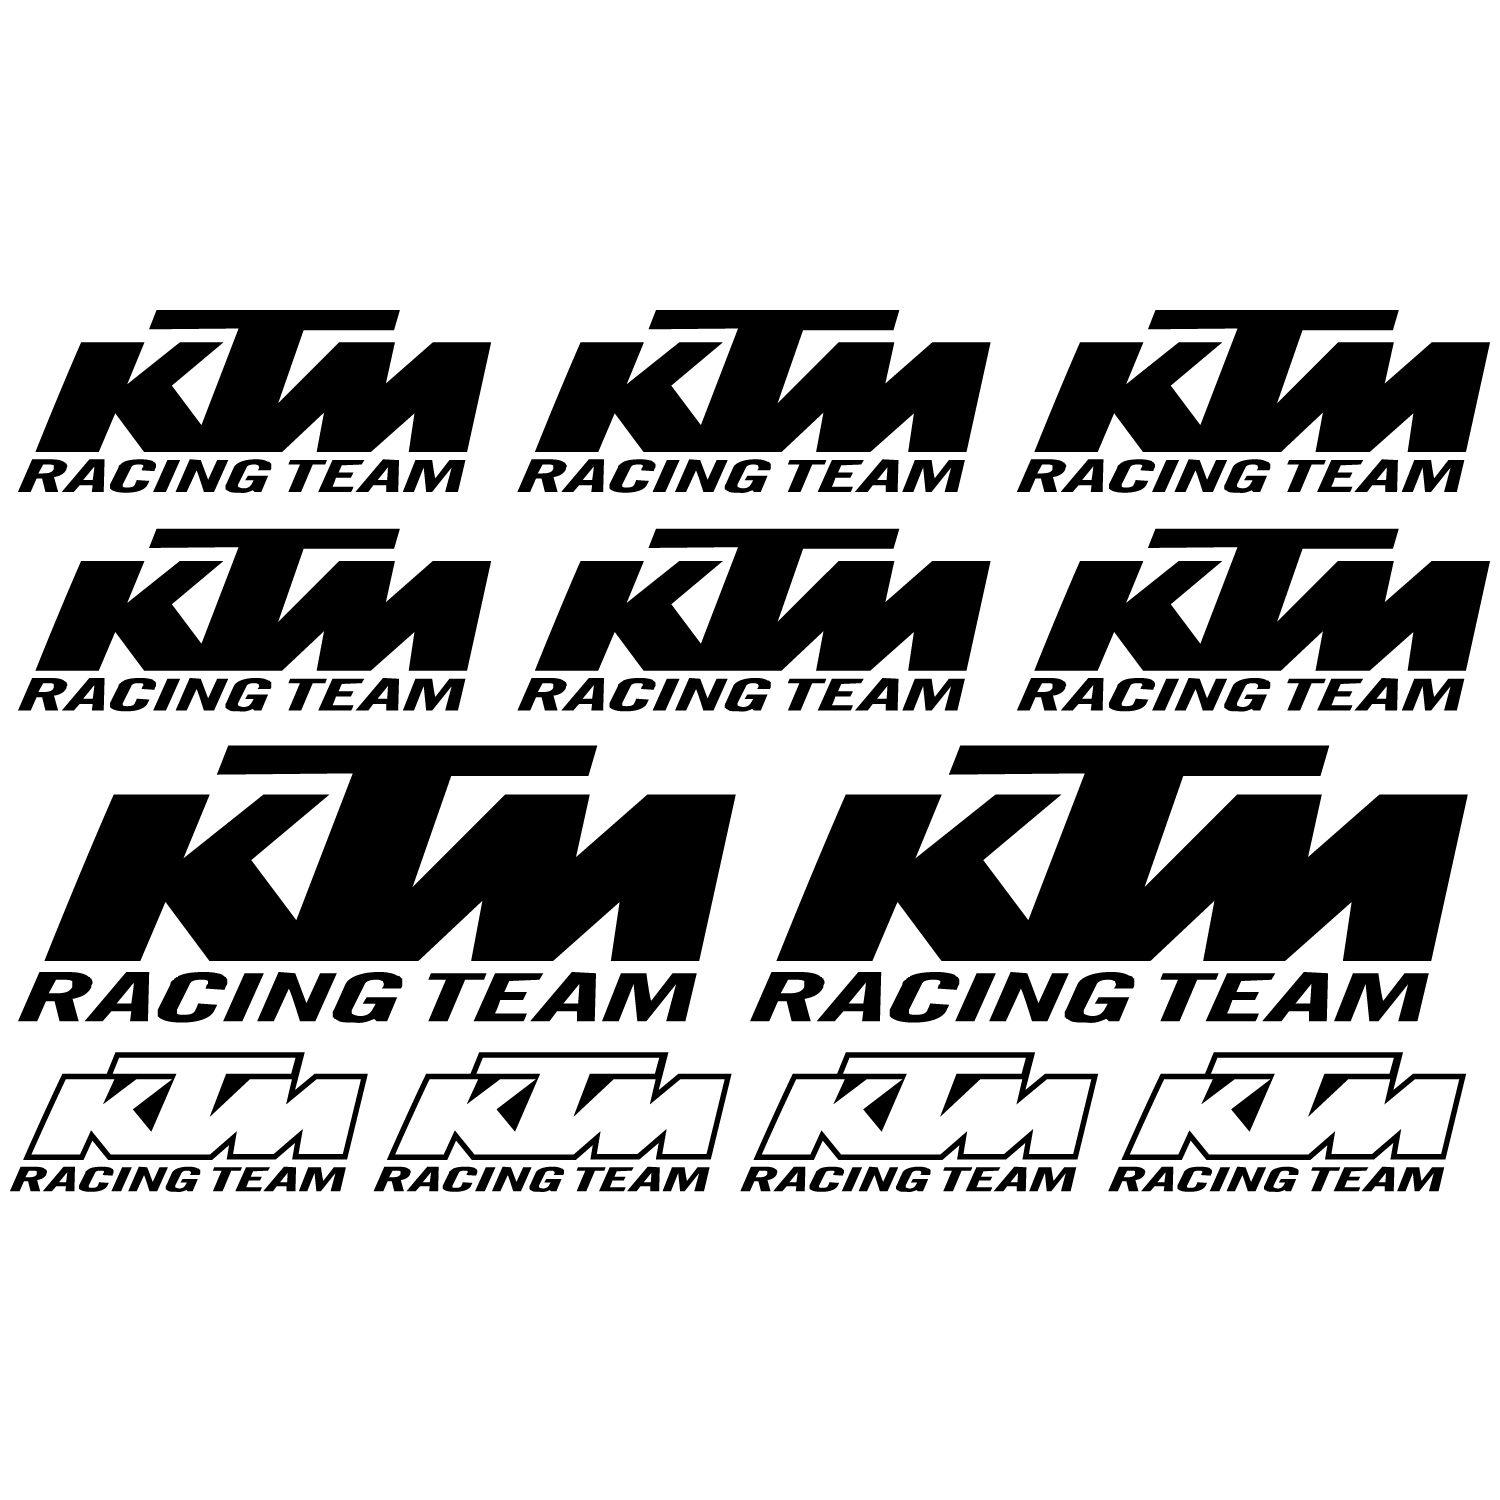 KTM Racing Logo - Wallstickers folies : ktm racing team Decal Stickers kit